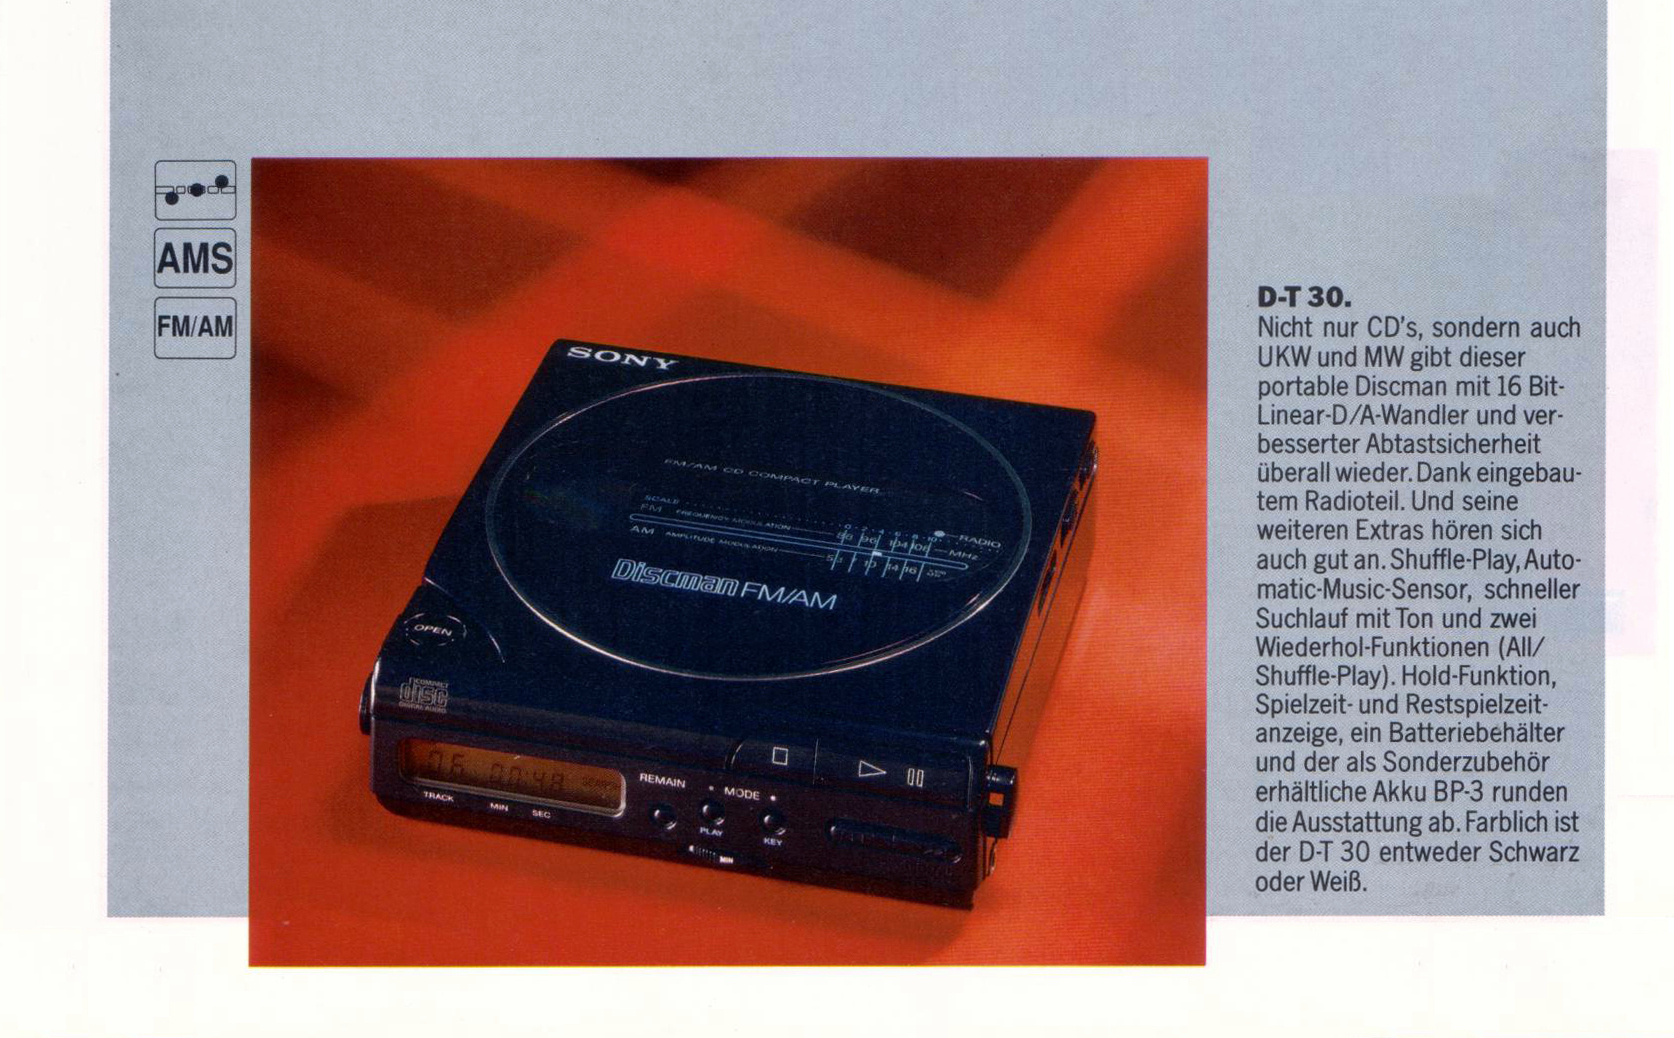 Sony D-T 30-Prospekt-1988.jpg